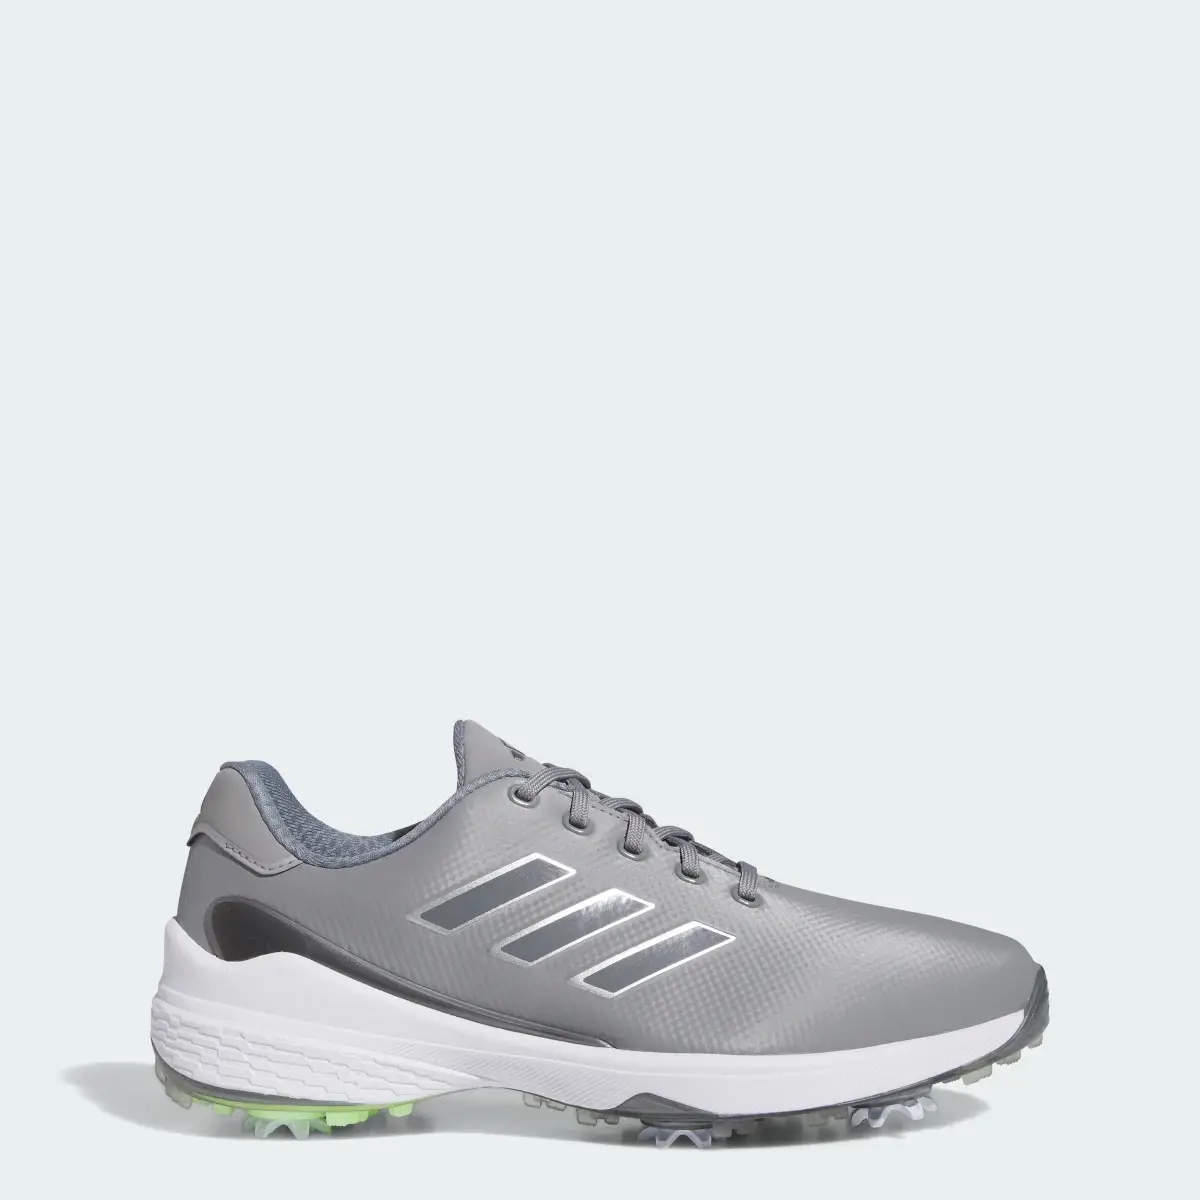 Adidas ZG23 Lightstrike Golf Shoes. 1